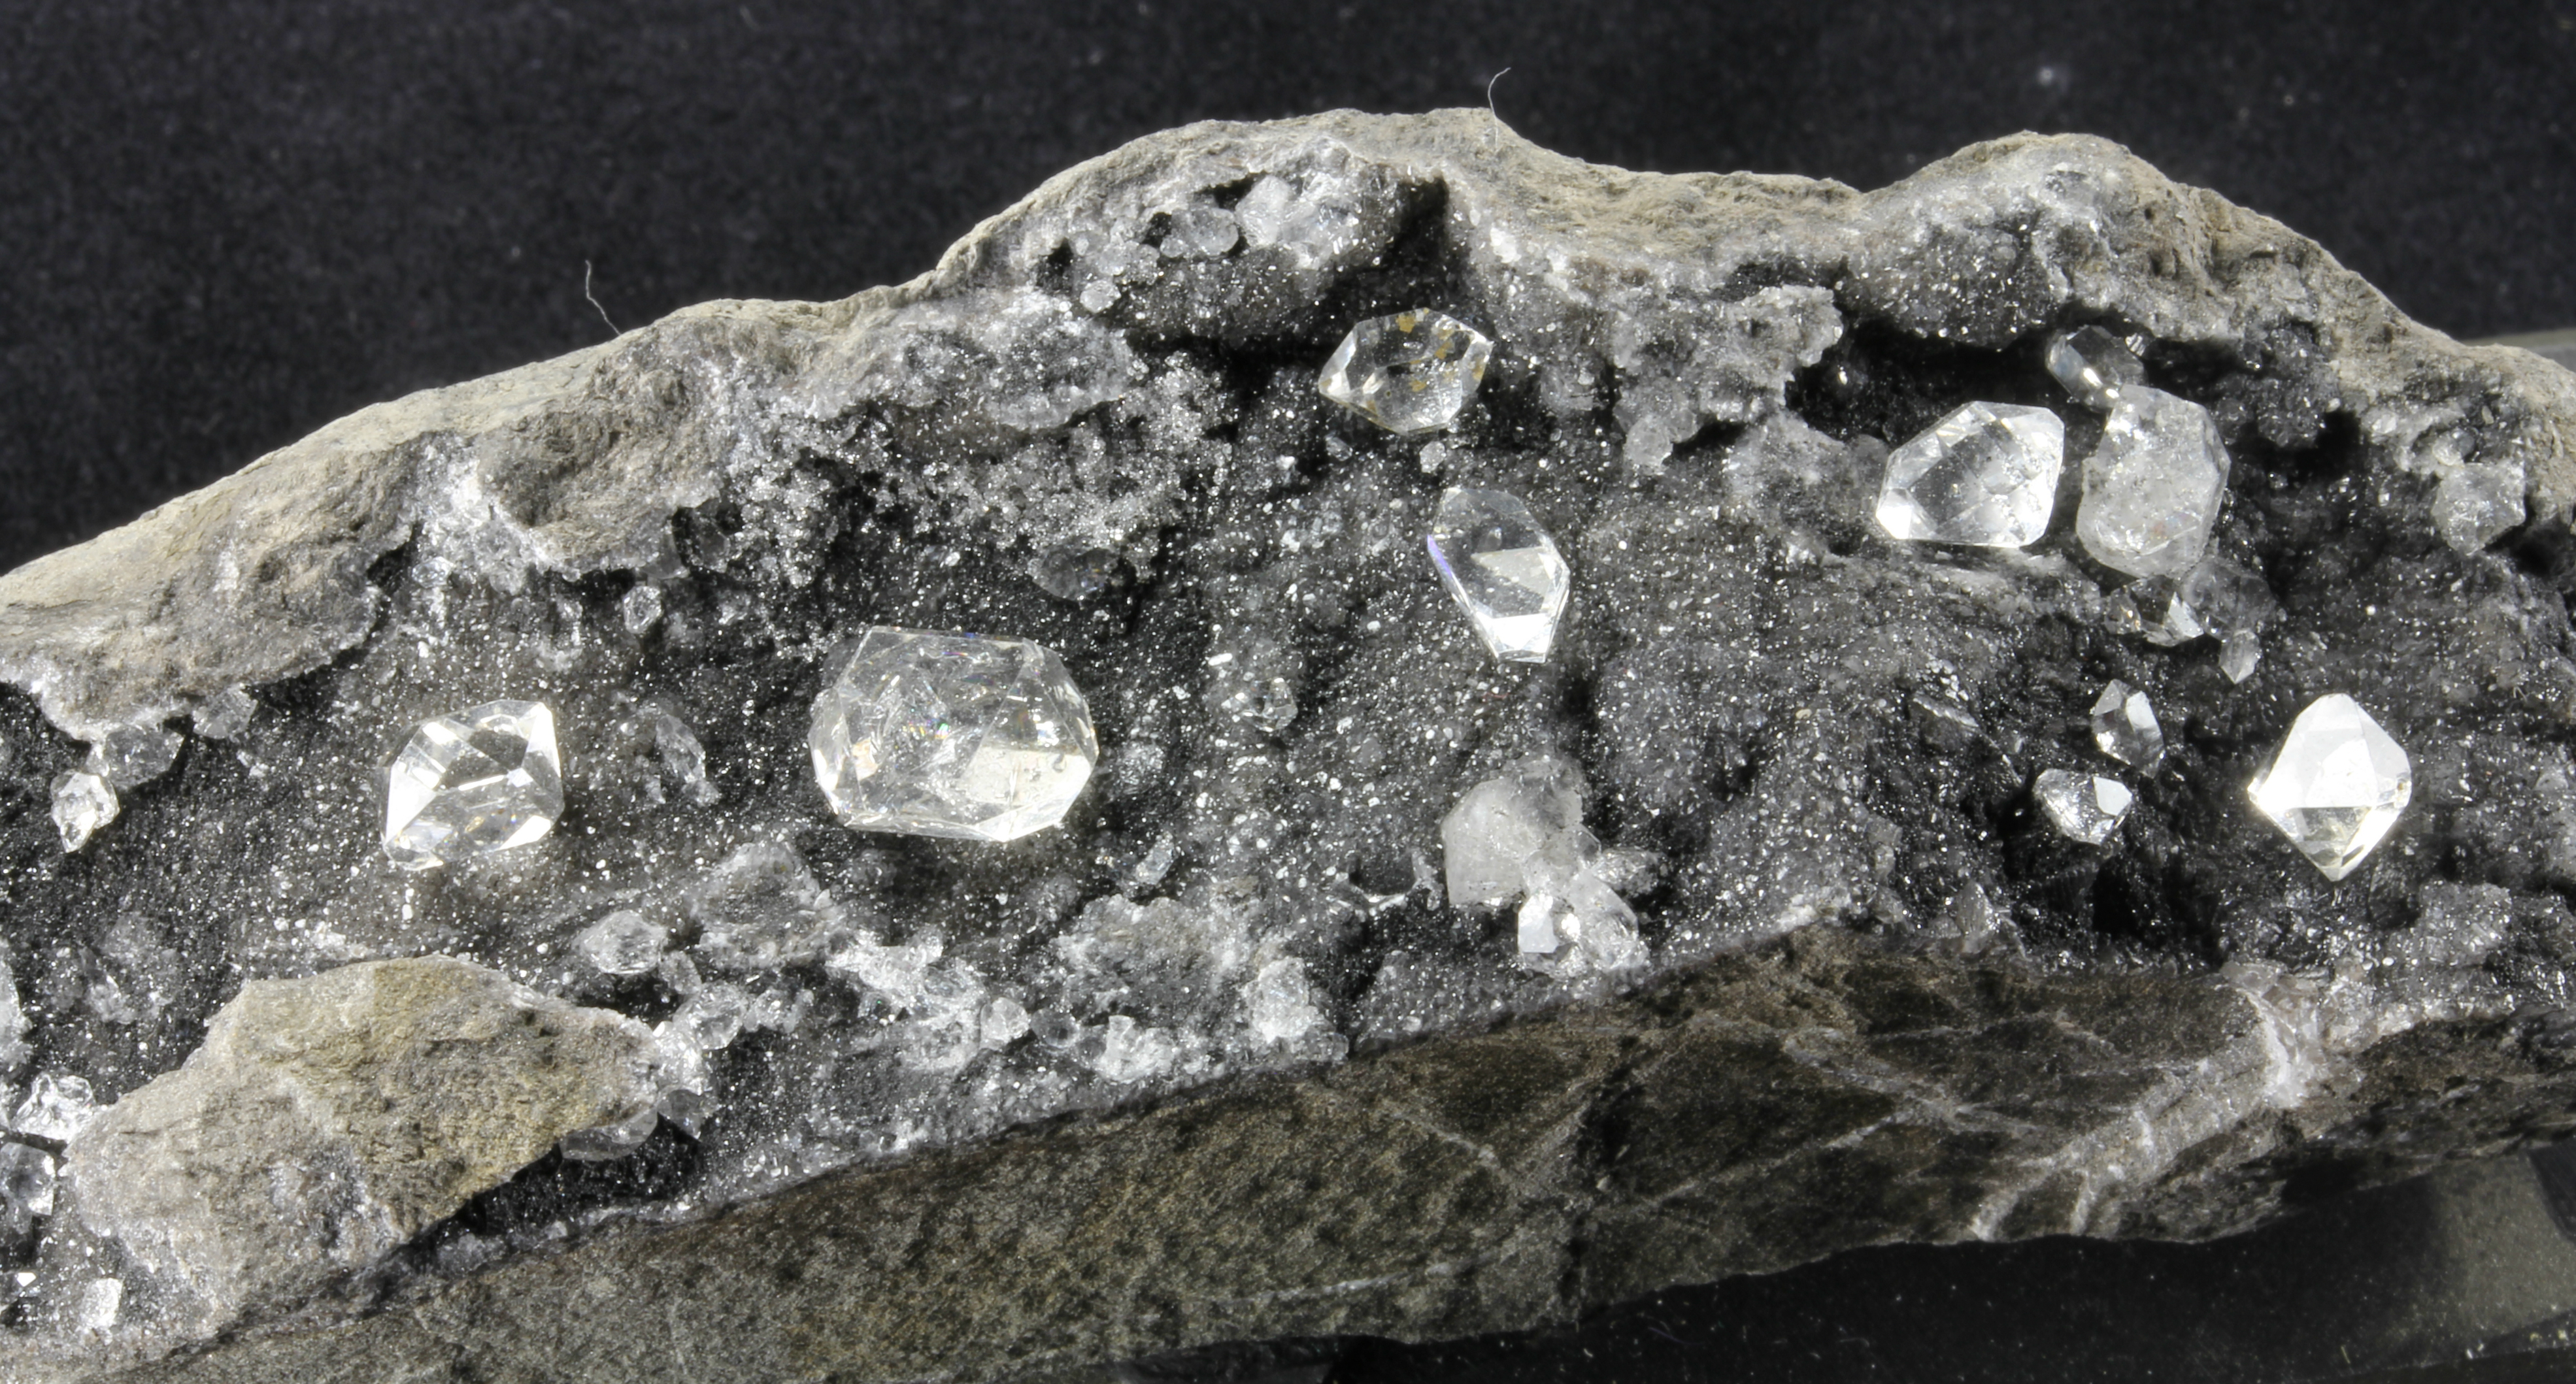 File:Rocks with quartz-type inclusions Maramureş diamonds.jpg ...